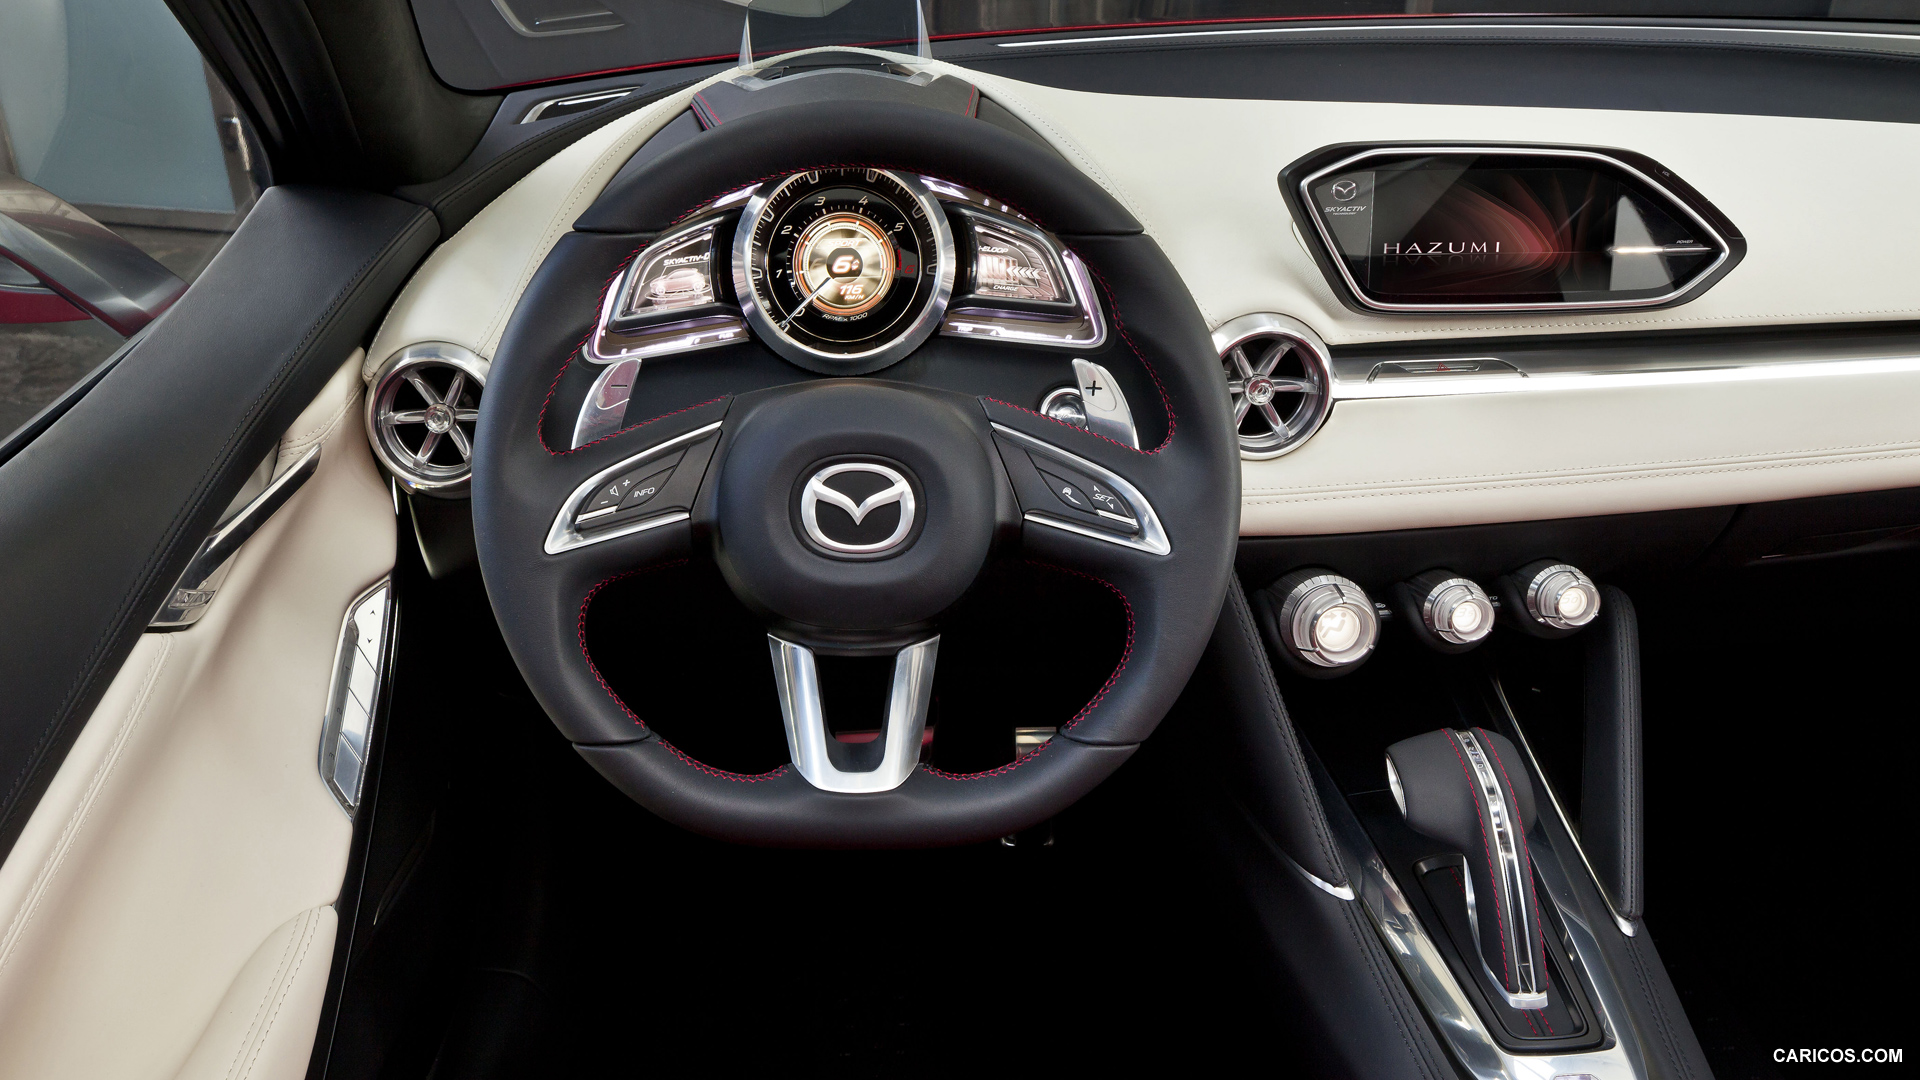 2014 Mazda Hazumi Concept  - Interior, #44 of 70